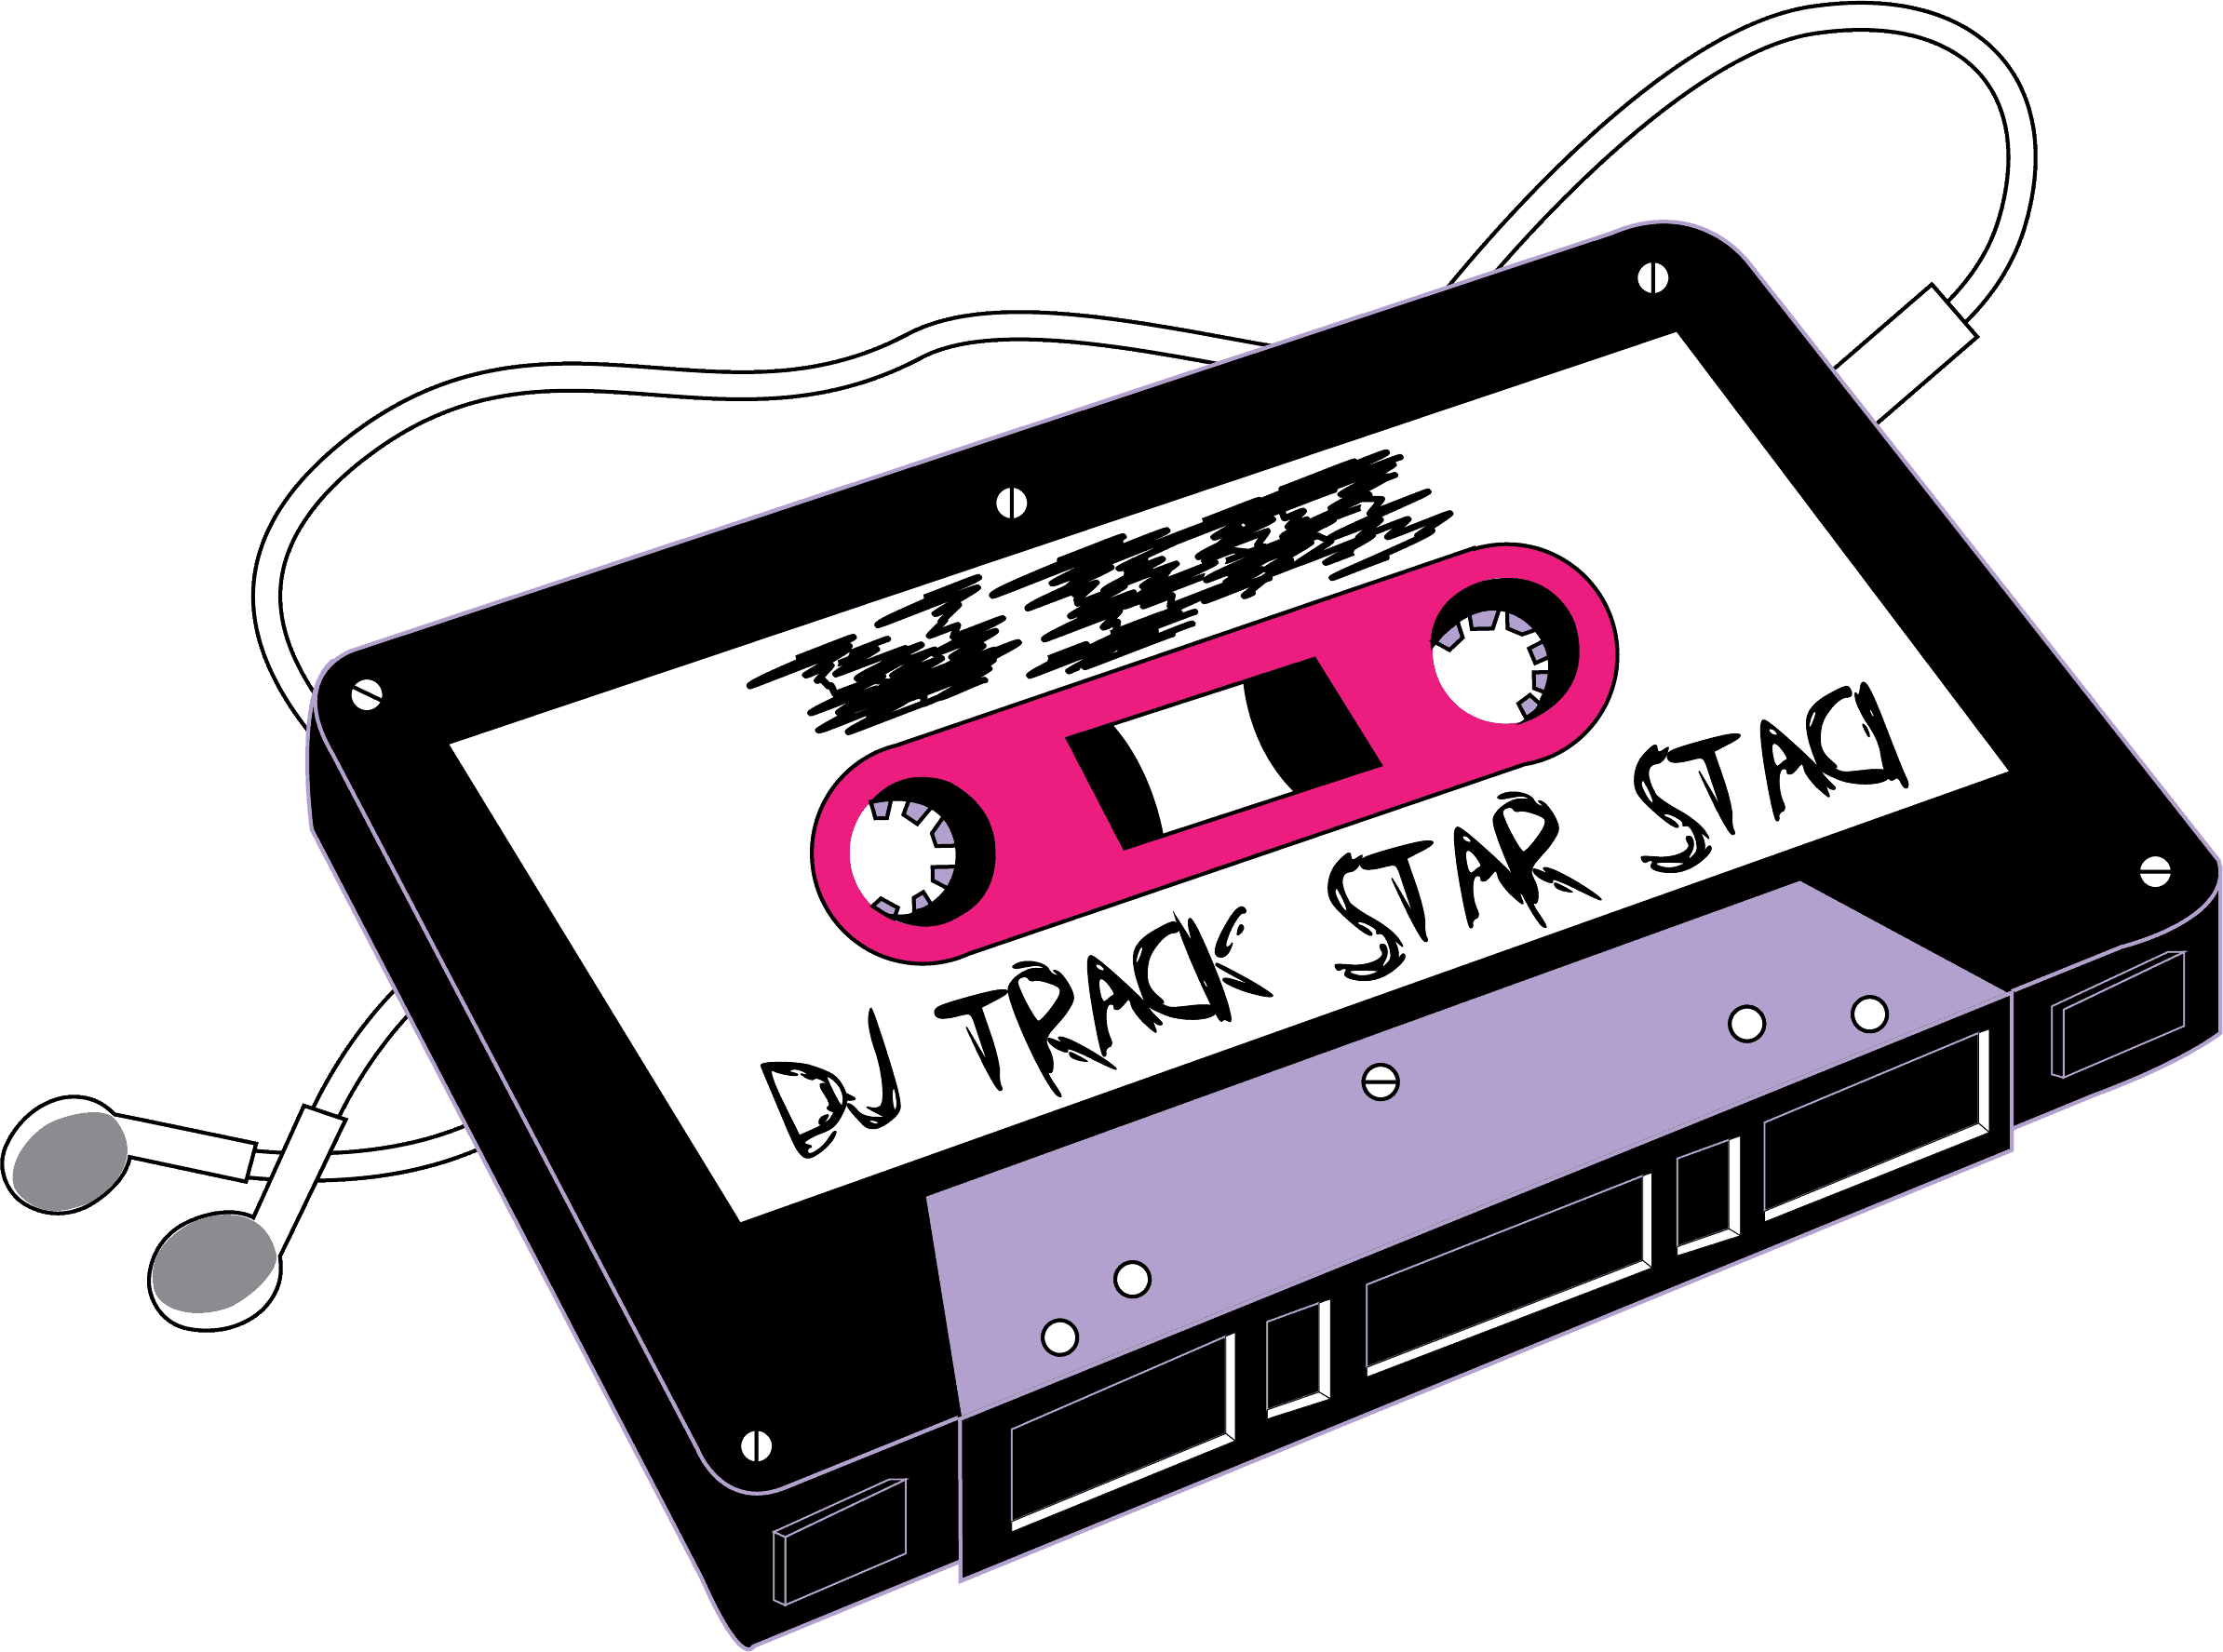 San Diego Corporate DJ Track Star Staci